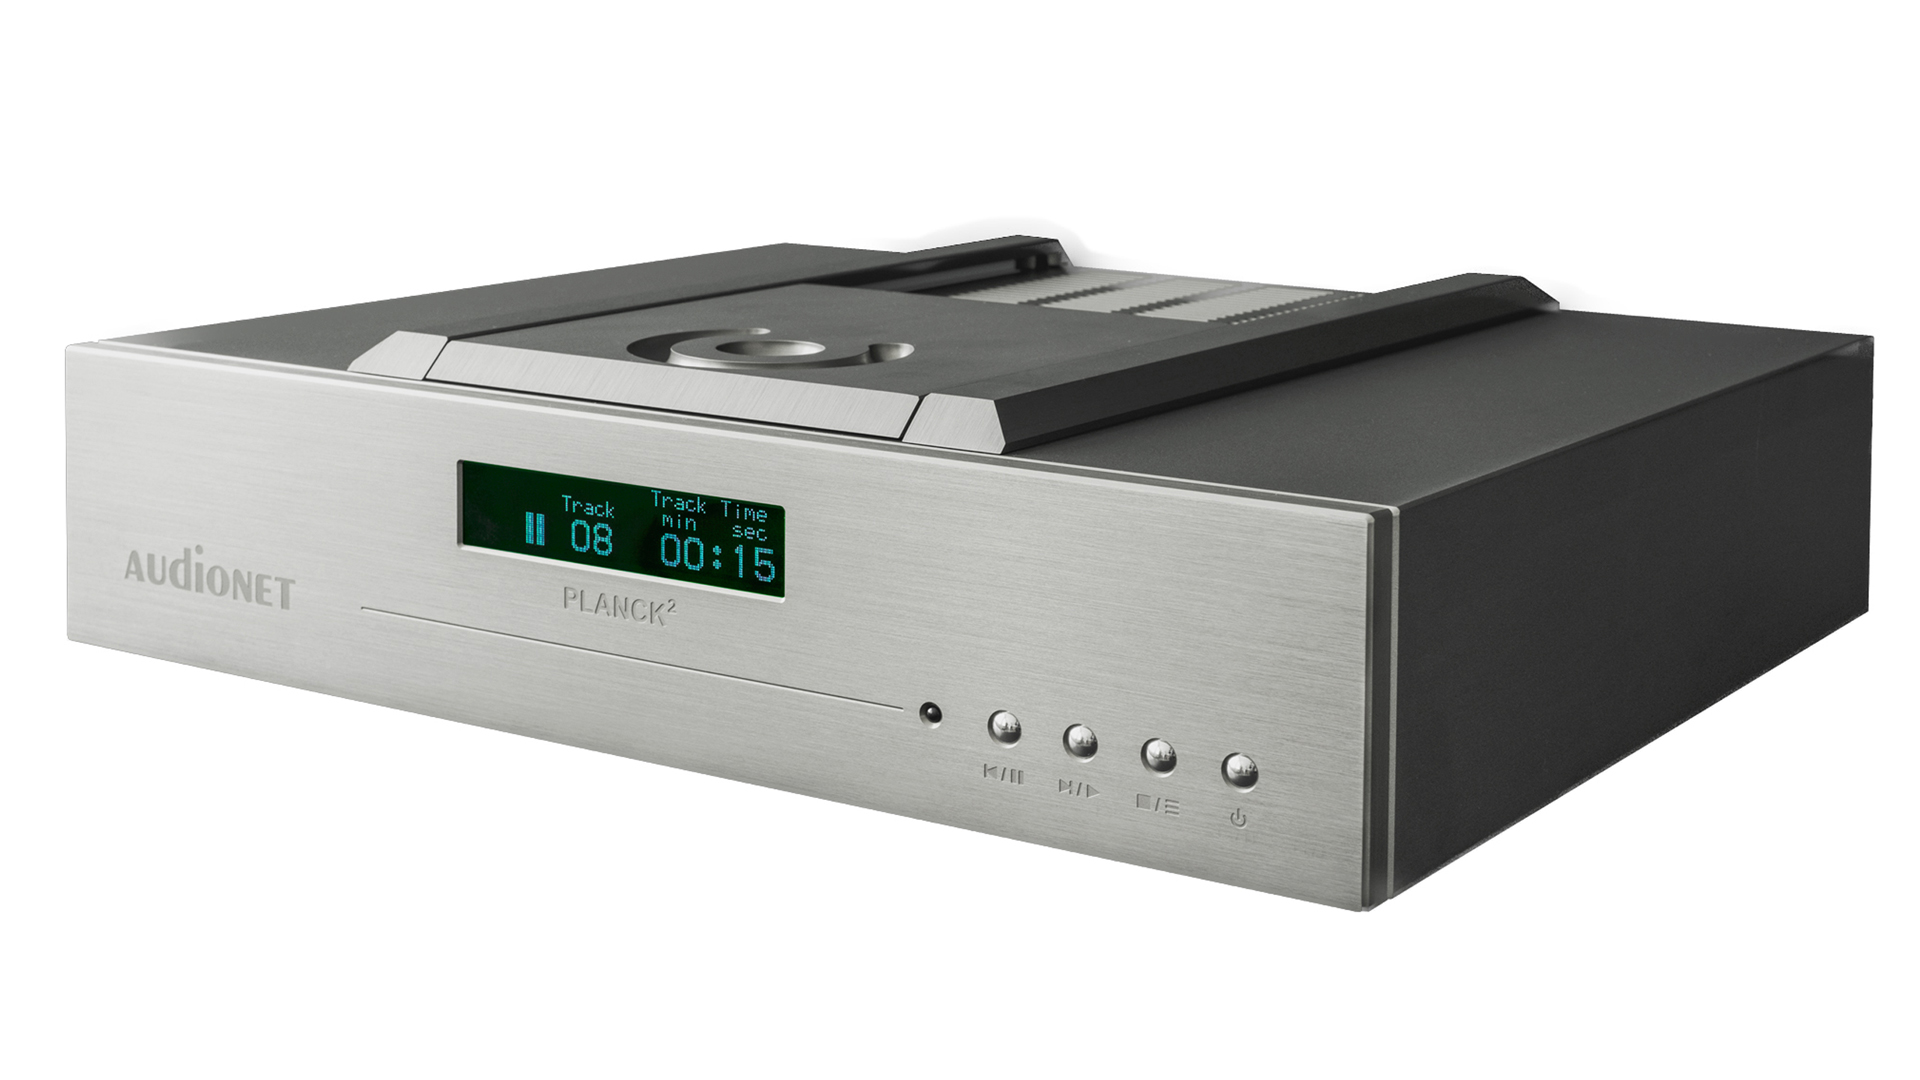 Audionet CD Player/DAC Planck 2 (Image Credit: Audionet)